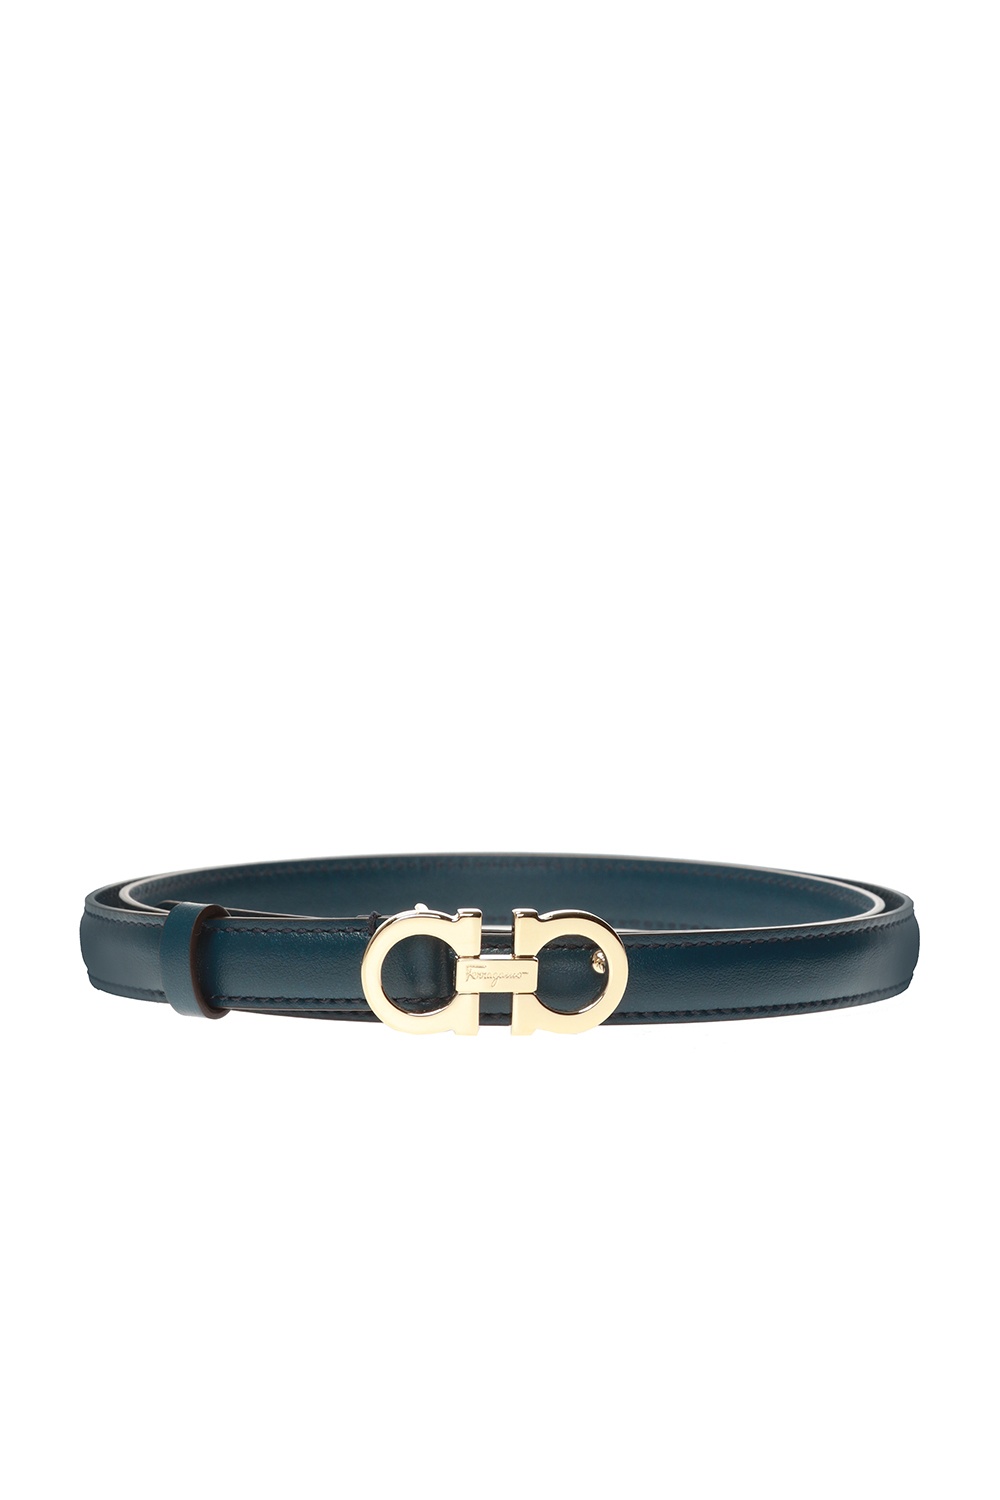 FERRAGAMO 'Gancini' motif belt, Women's Accessories